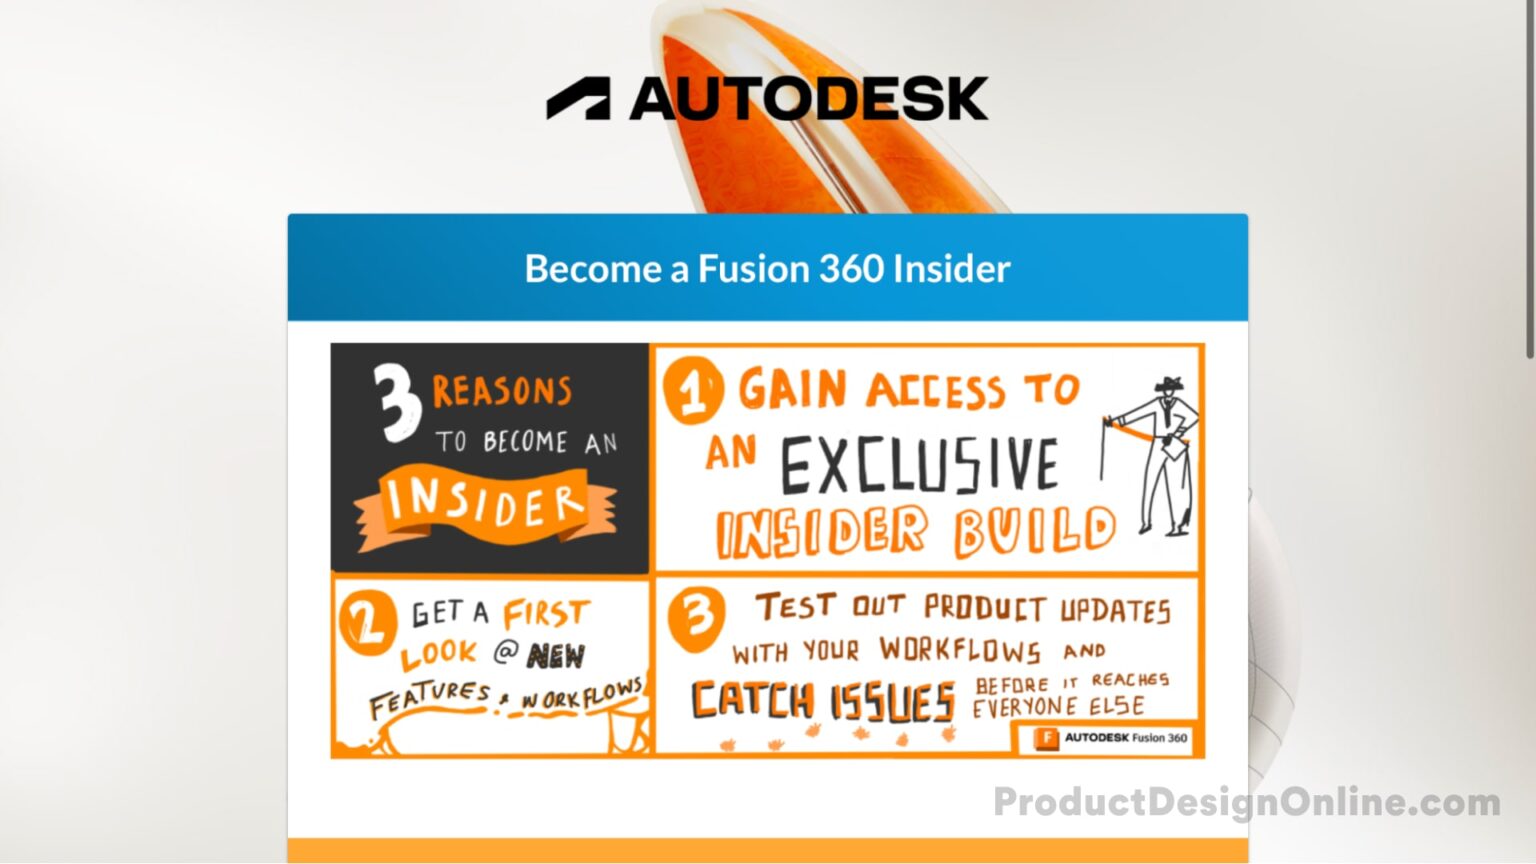 Autodesk Fusion 360 Insider Program